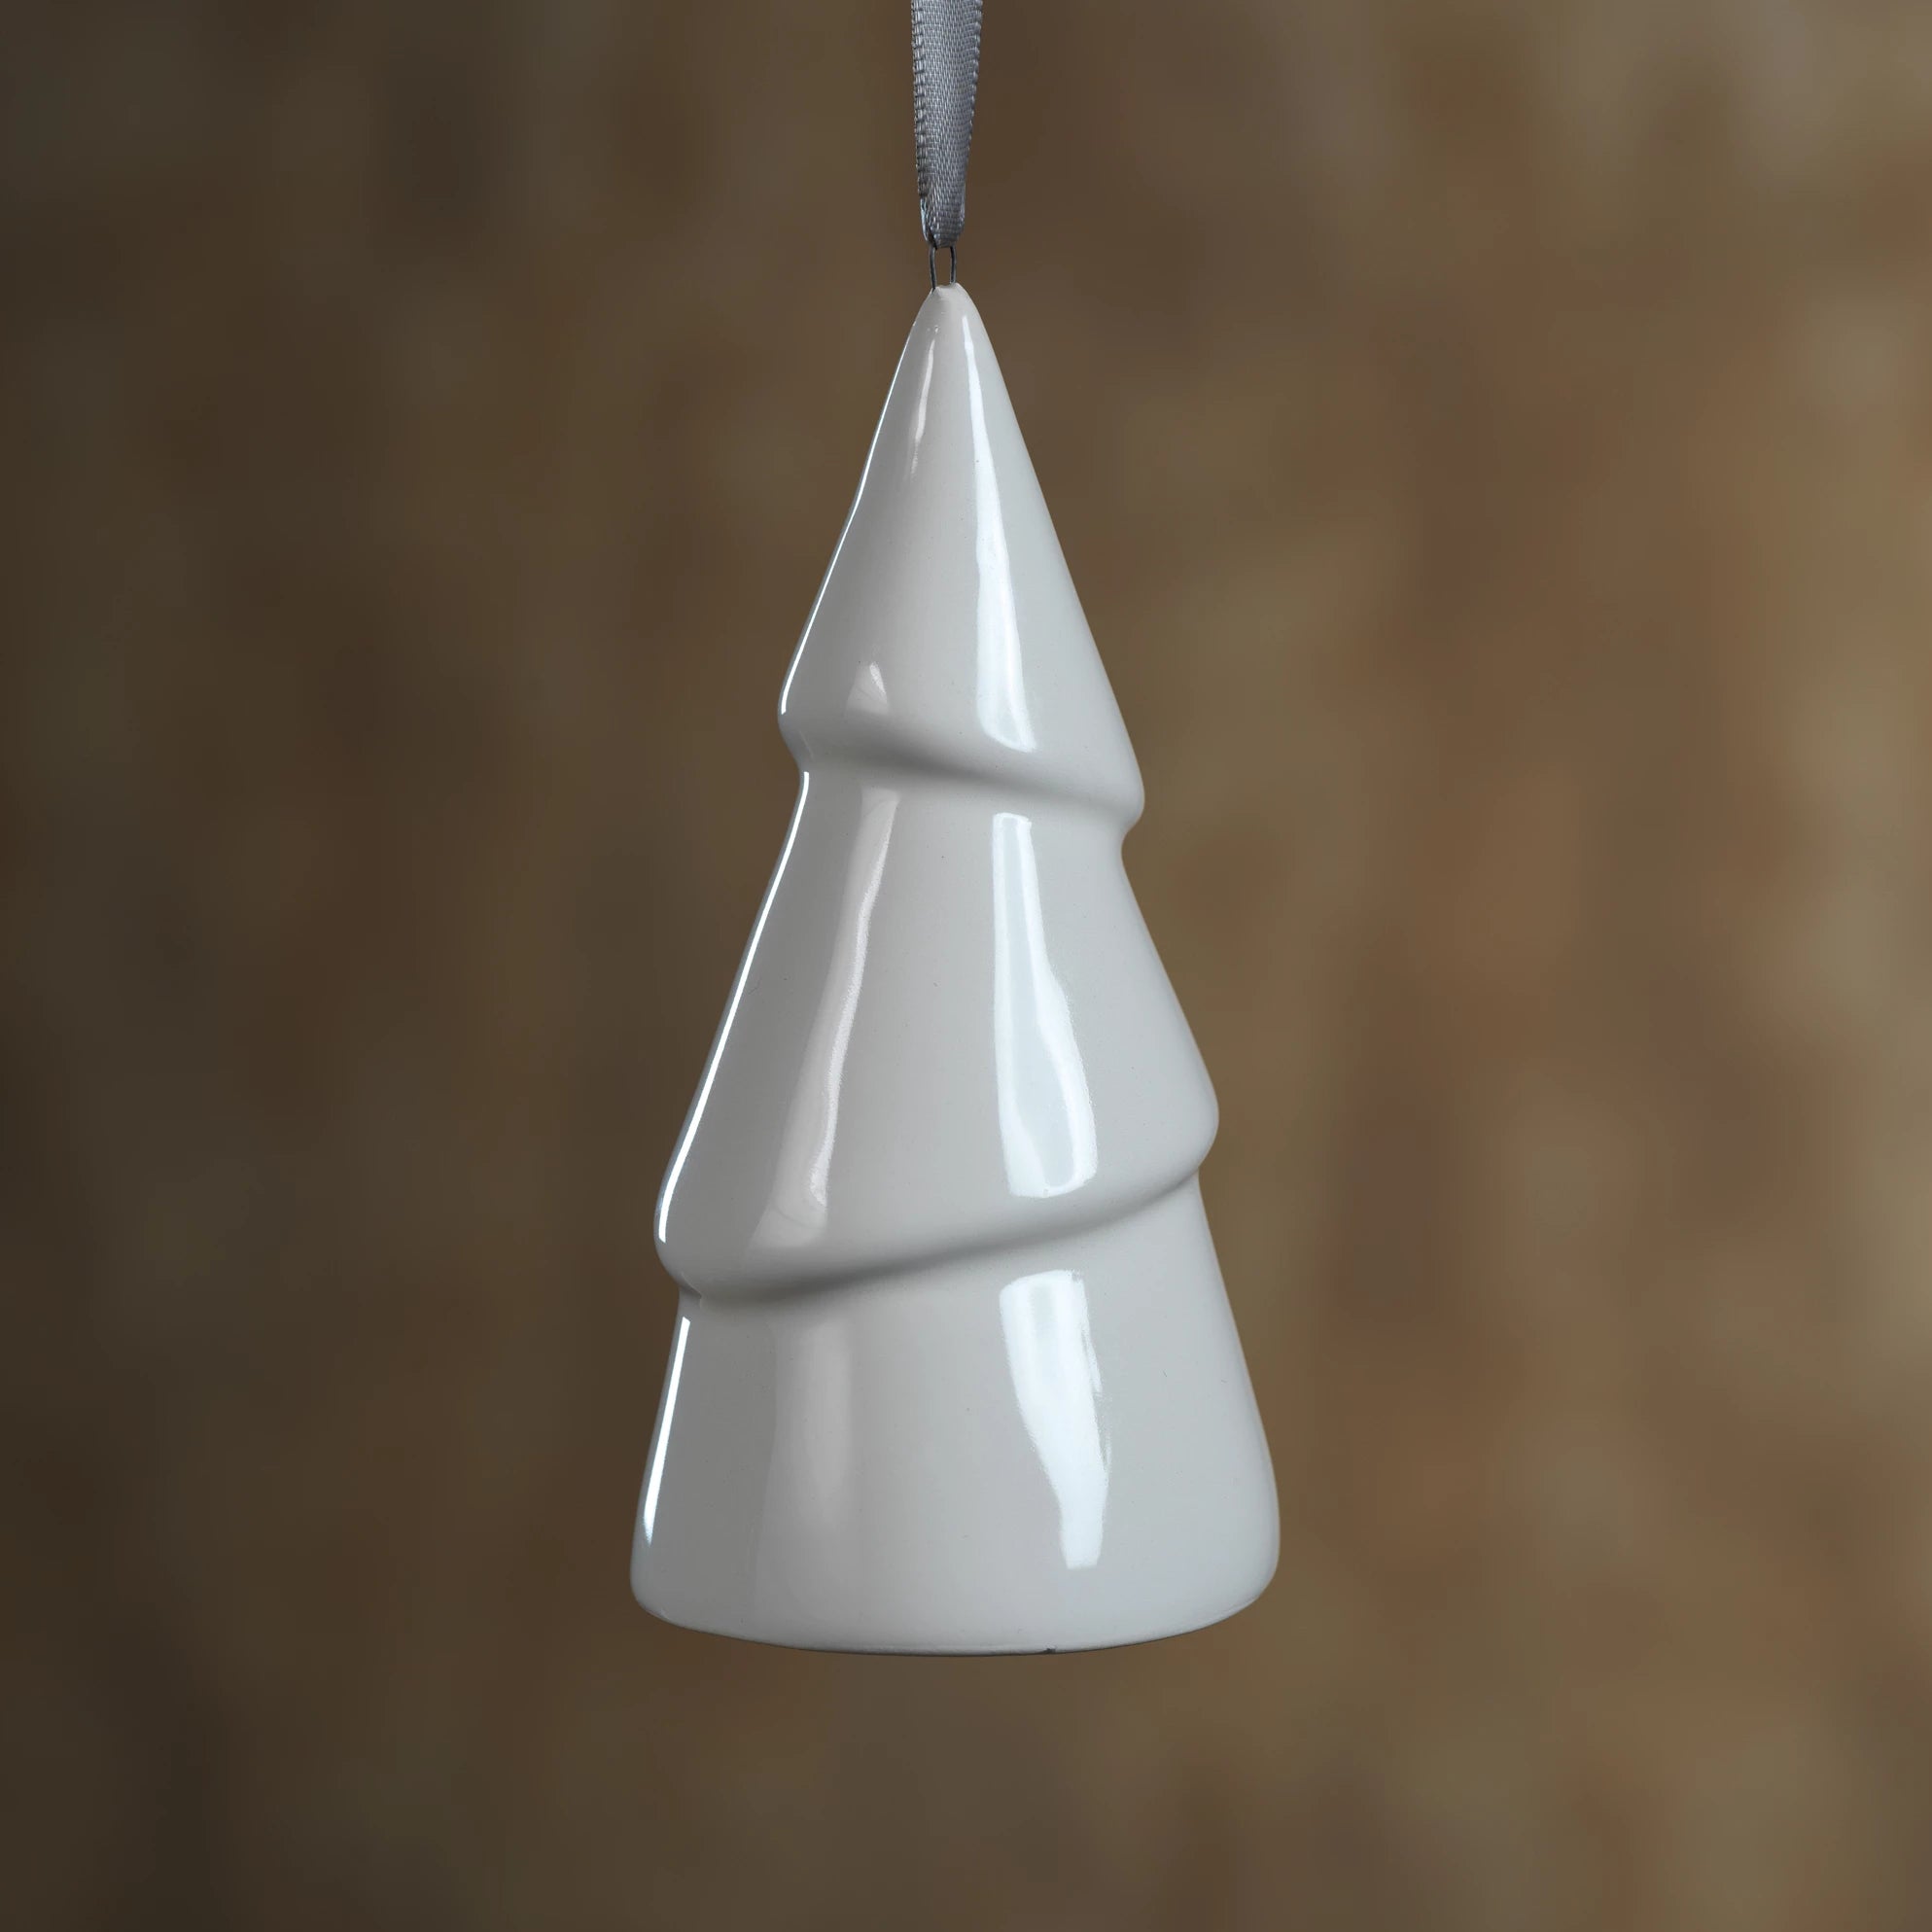 Ceramic White Tree Ornament - Set of 4 - CARLYLE AVENUE